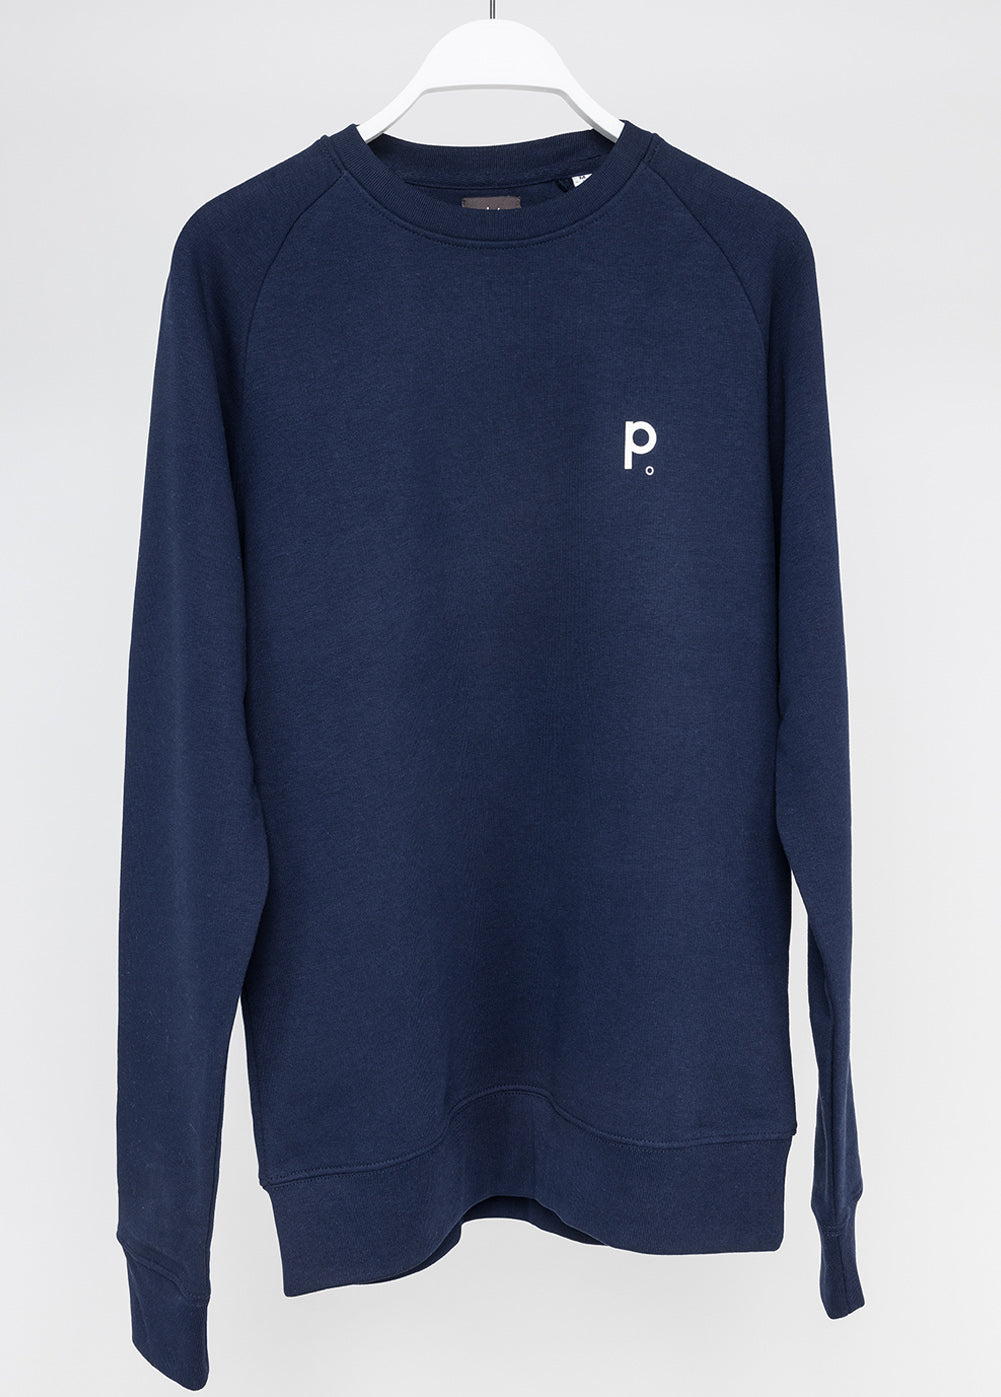 P Logo Sweatshirt